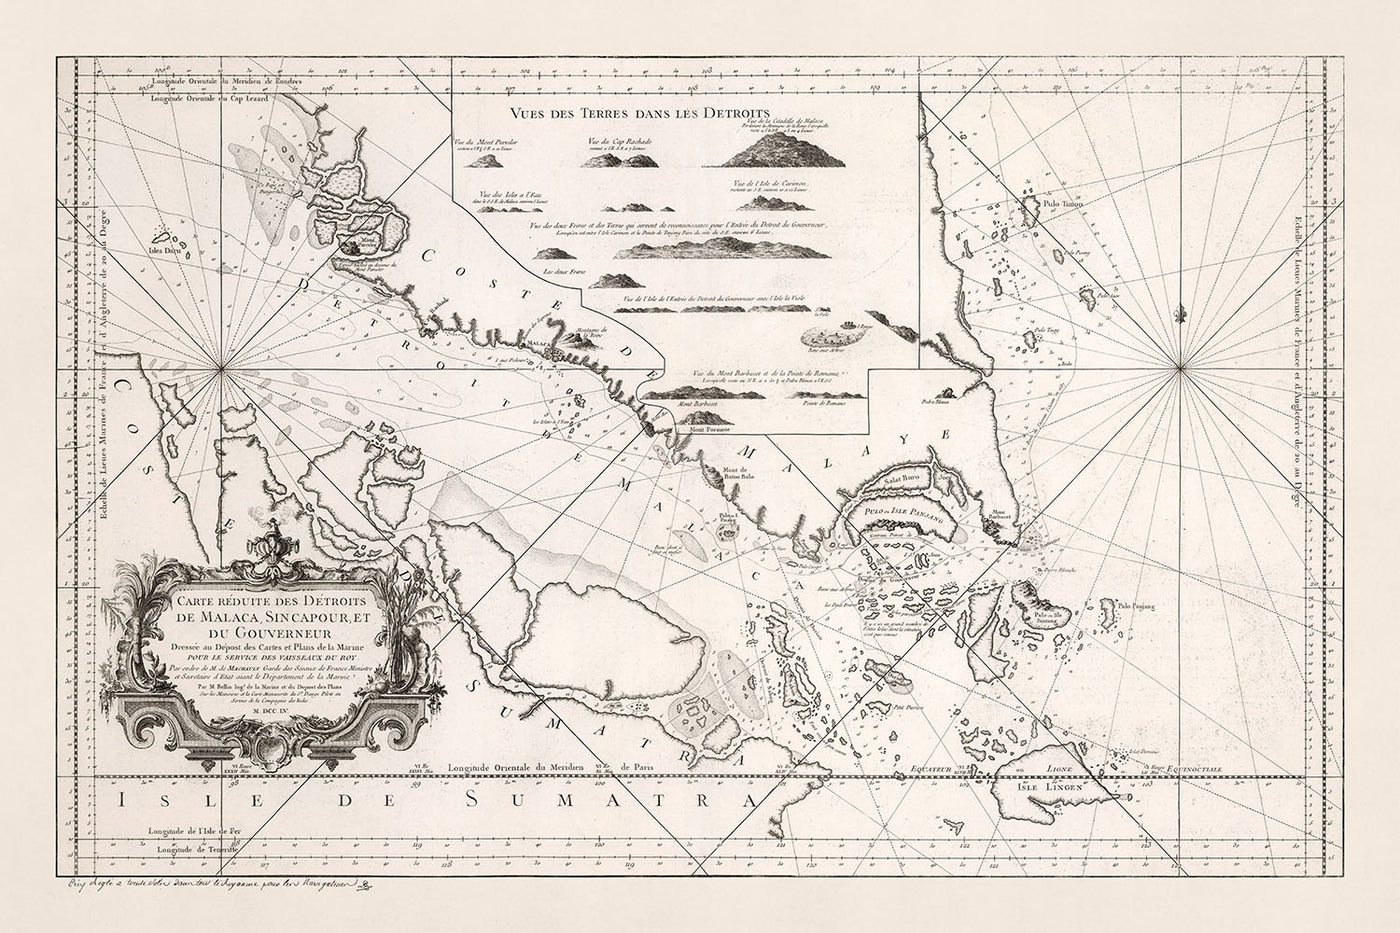 Old Map of Singapore & Malacca Strait by Bellin, 1755: Singapore Island, Malaysia, Indonesia, Lingga